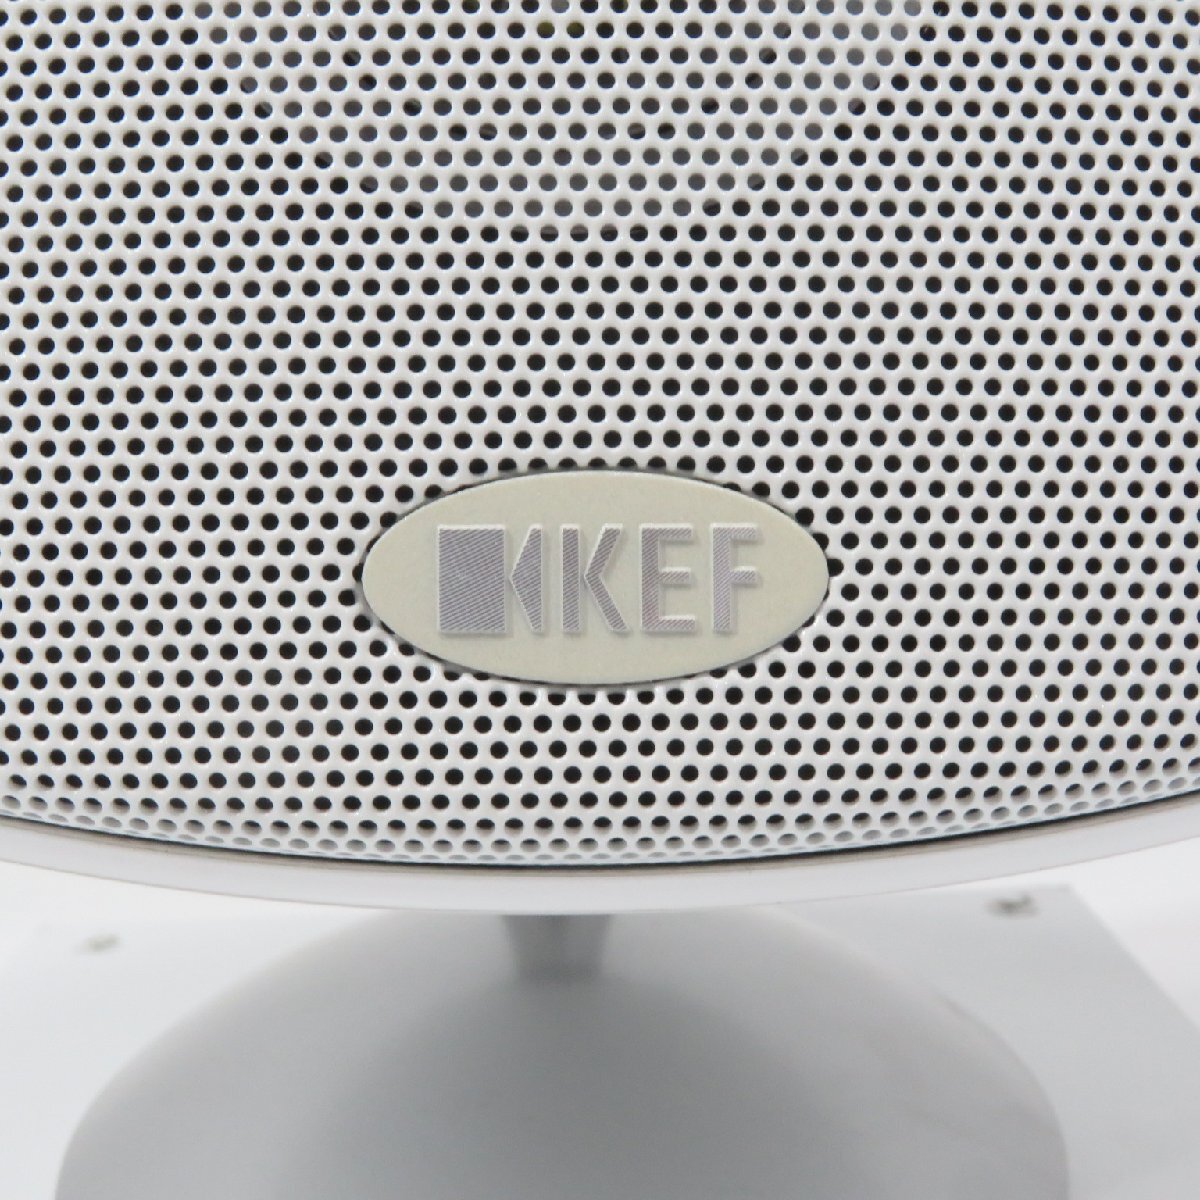 KEF ケフ E301c マイクスピーカー ホワイト 動作未確認 2ウェイバスレフ型 スピーカーシステム 音楽 OA機器 YH12415 中古オーディオ機器_画像5